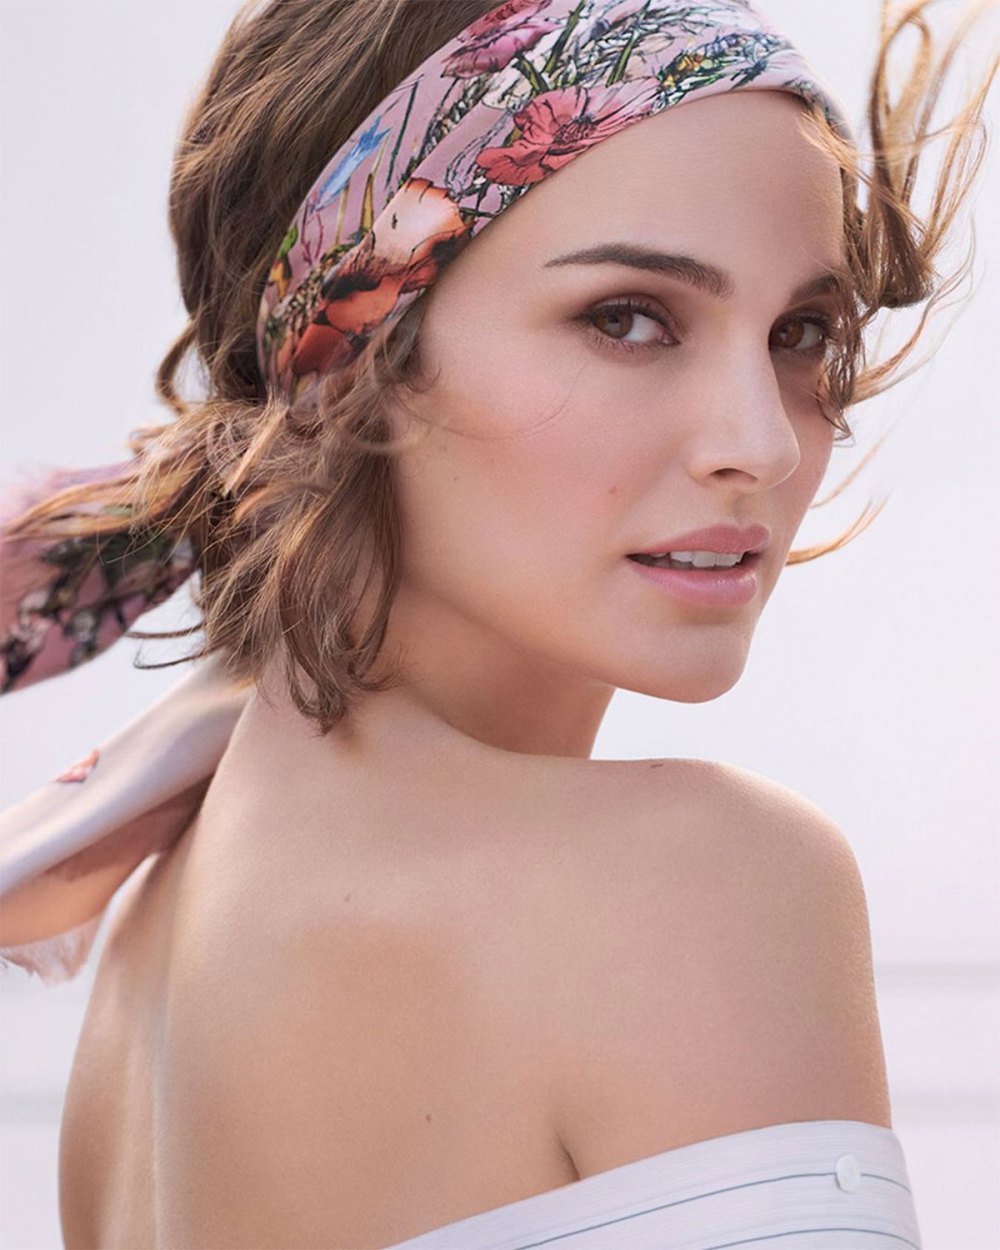 Natalie Portman Latest Miss Dior Fragrance Campaign Is a Floral Wonderland 2